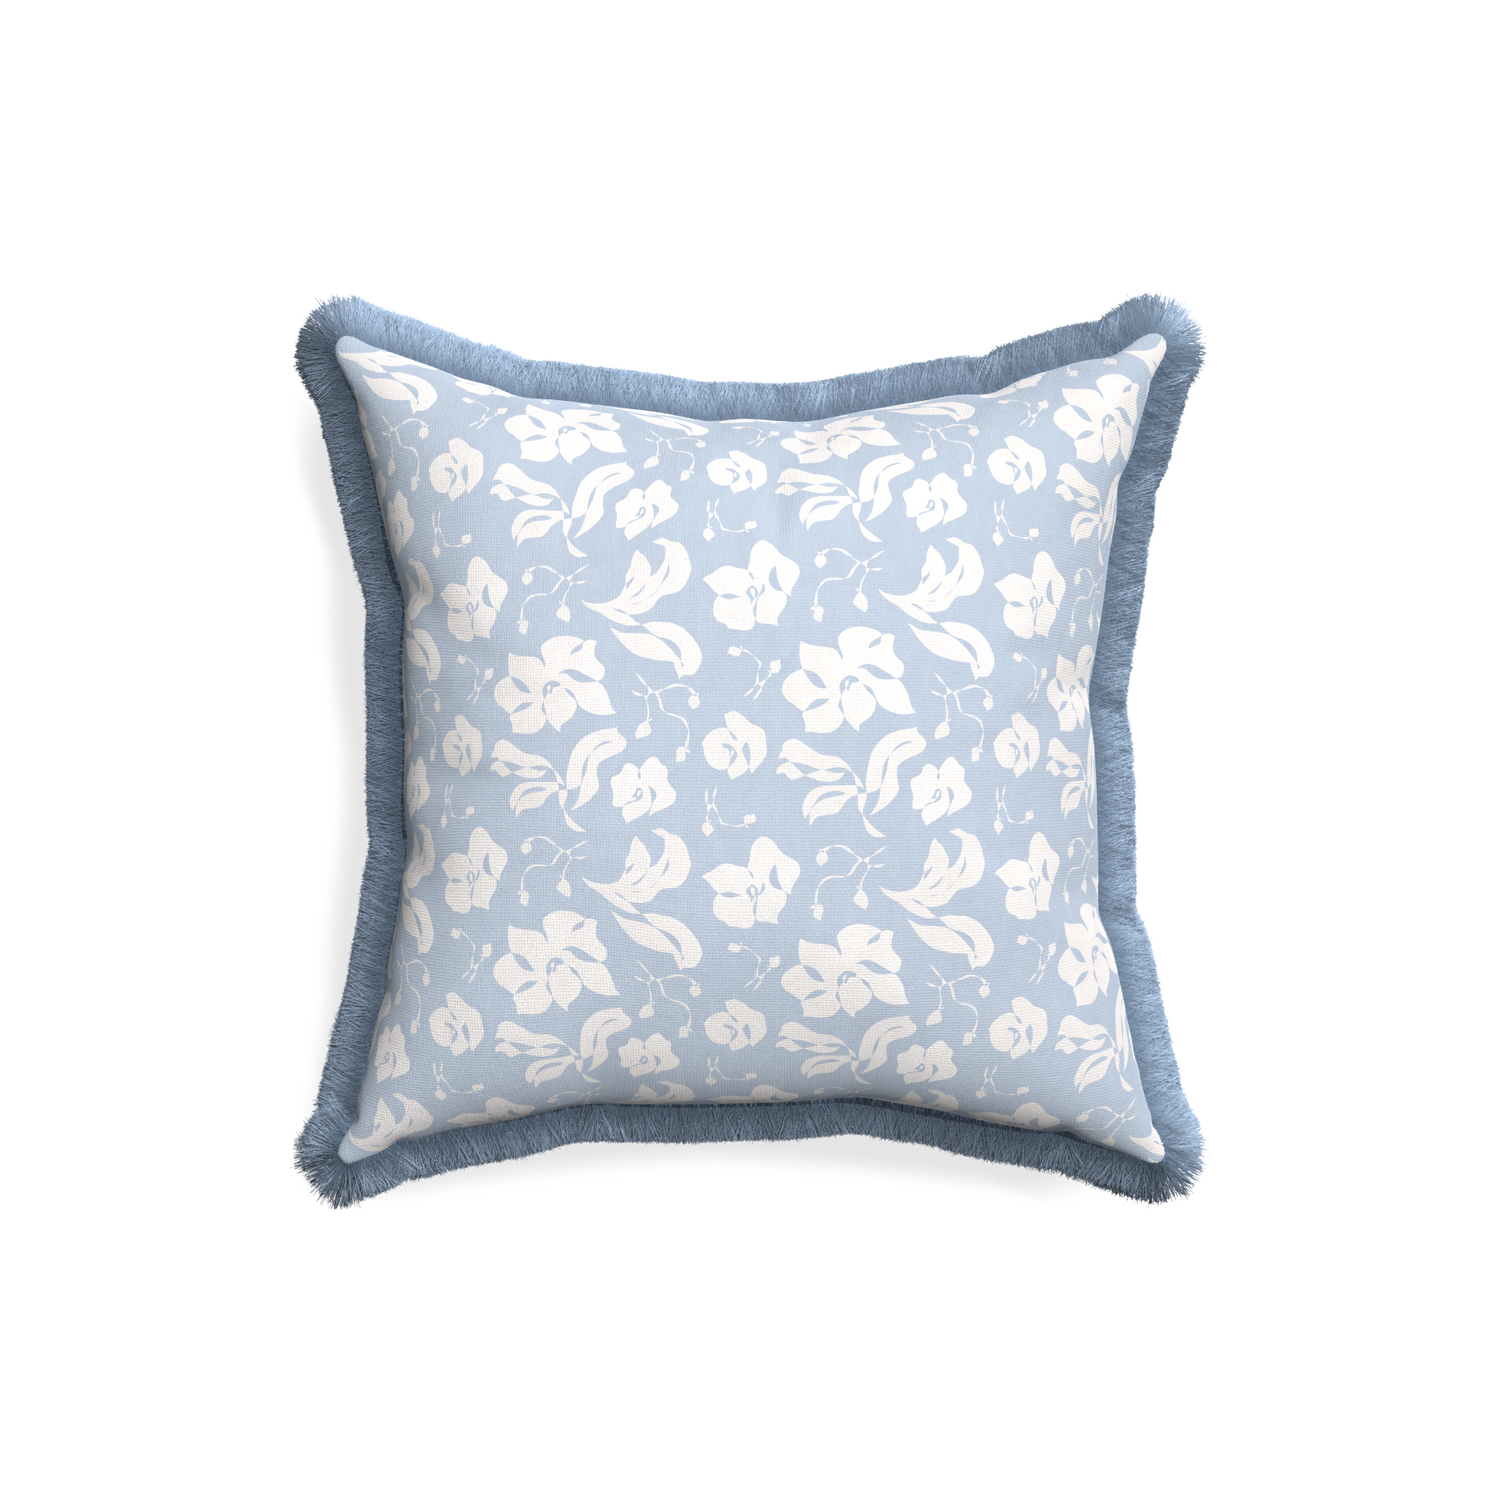 18-square georgia custom pillow with sky fringe on white background